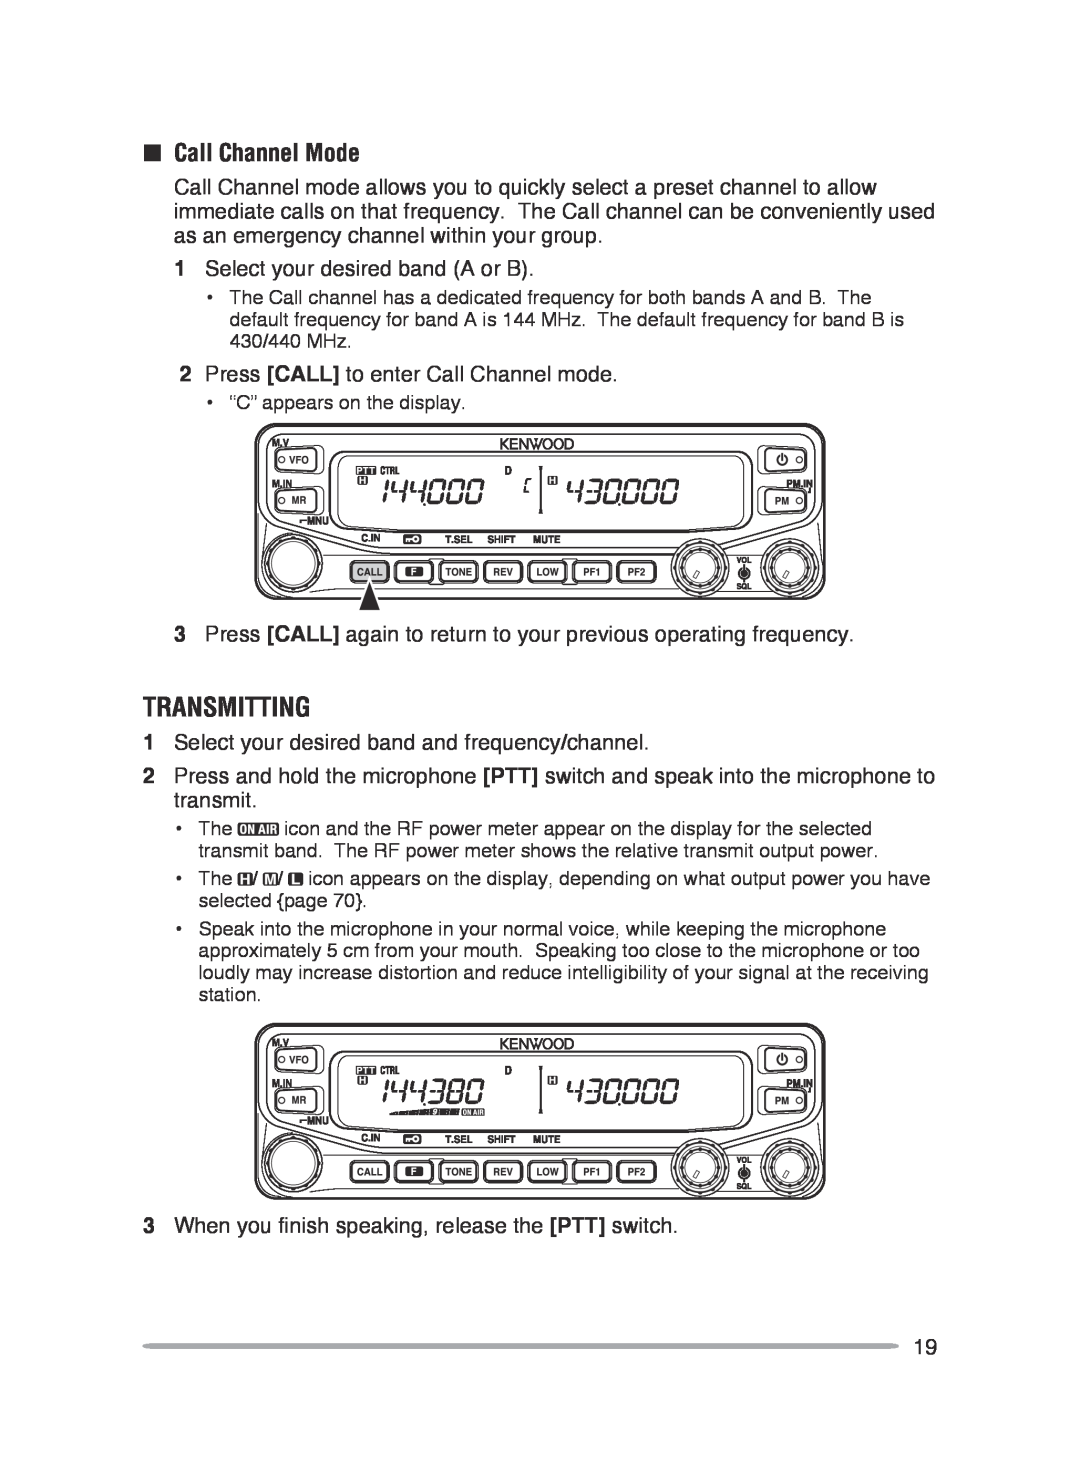 Kenwood TM-V71A, TM-V71E instruction manual Transmitting, Call Channel Mode 